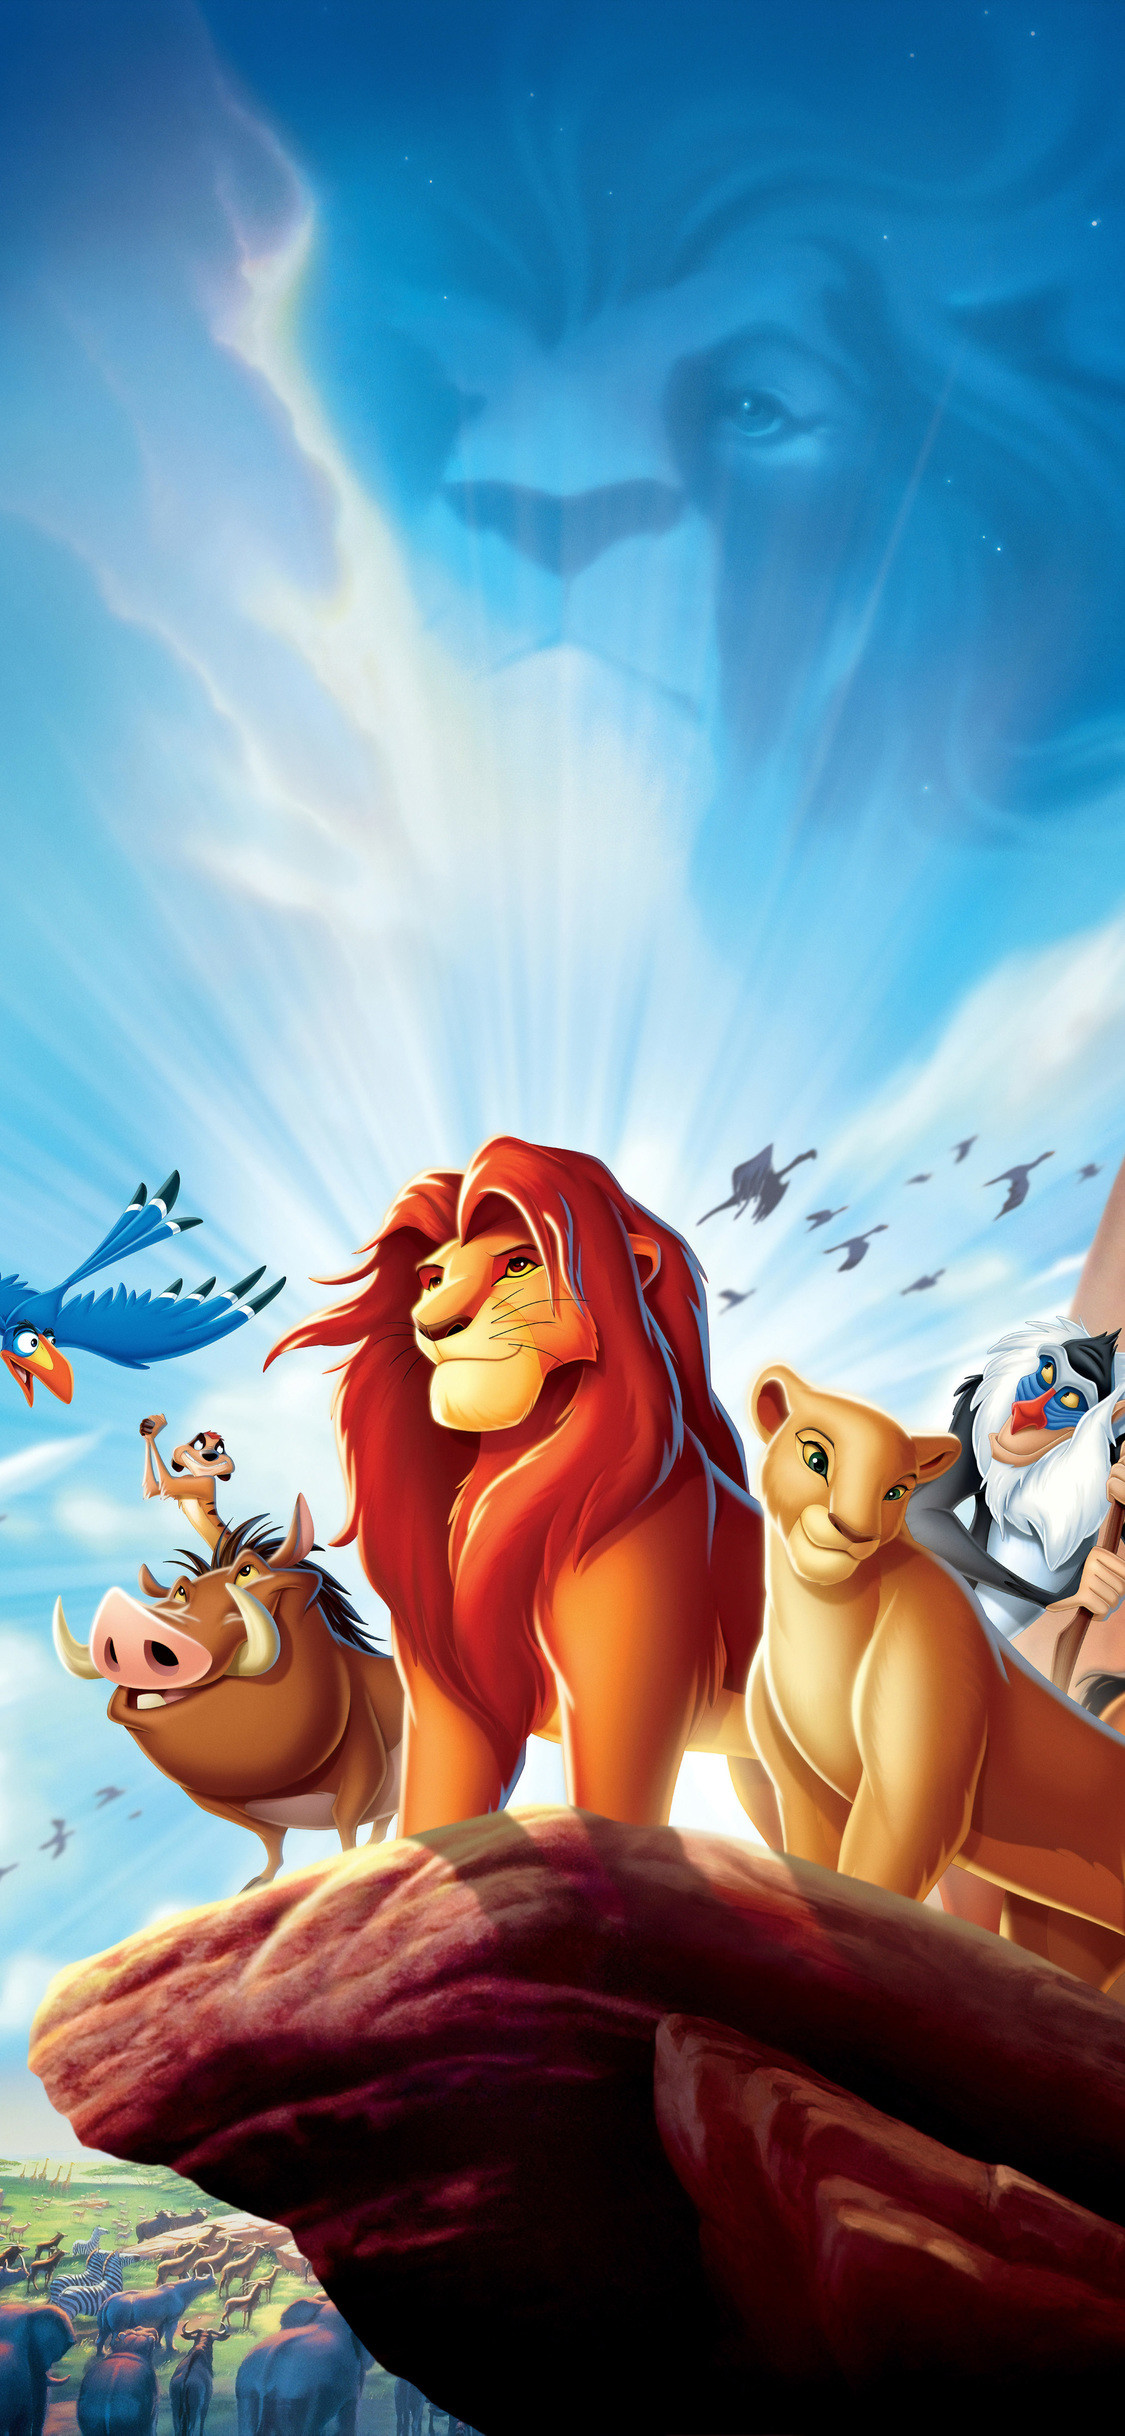 4K Ultra HD Lions Wallpapers  Top Free 4K Ultra HD Lions Backgrounds   WallpaperAccess